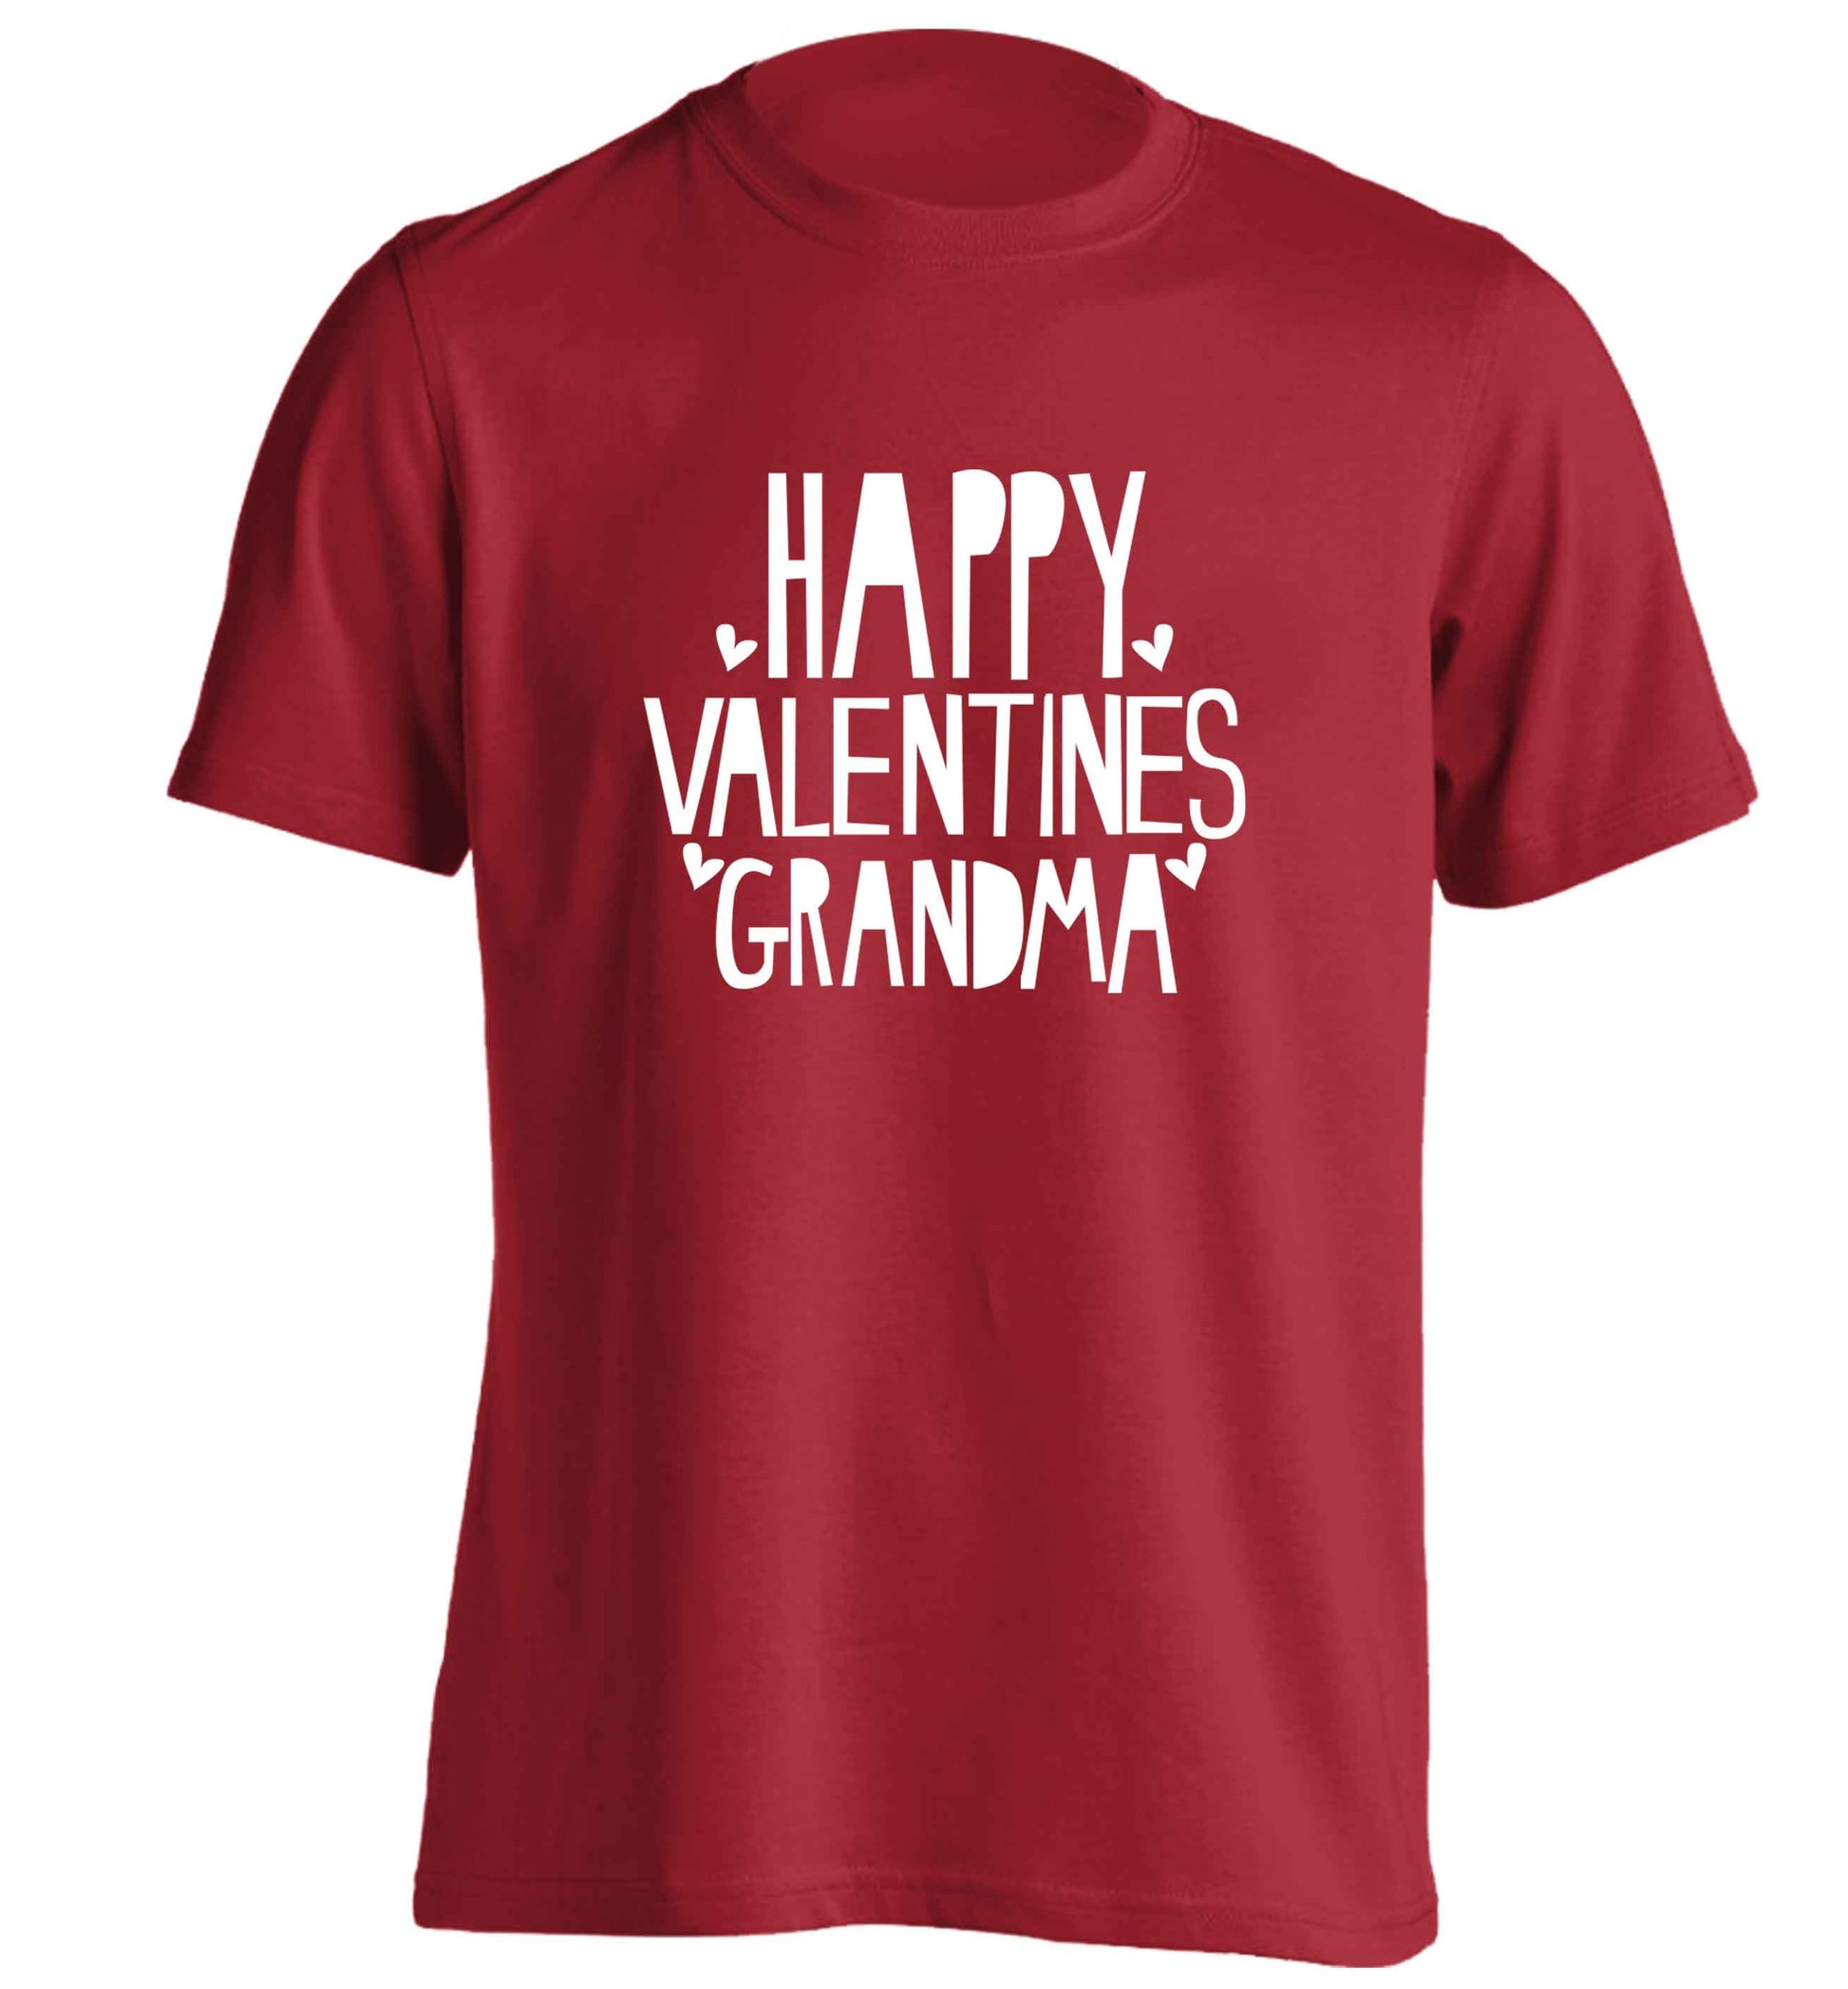 Happy valentines grandma adults unisex red Tshirt 2XL